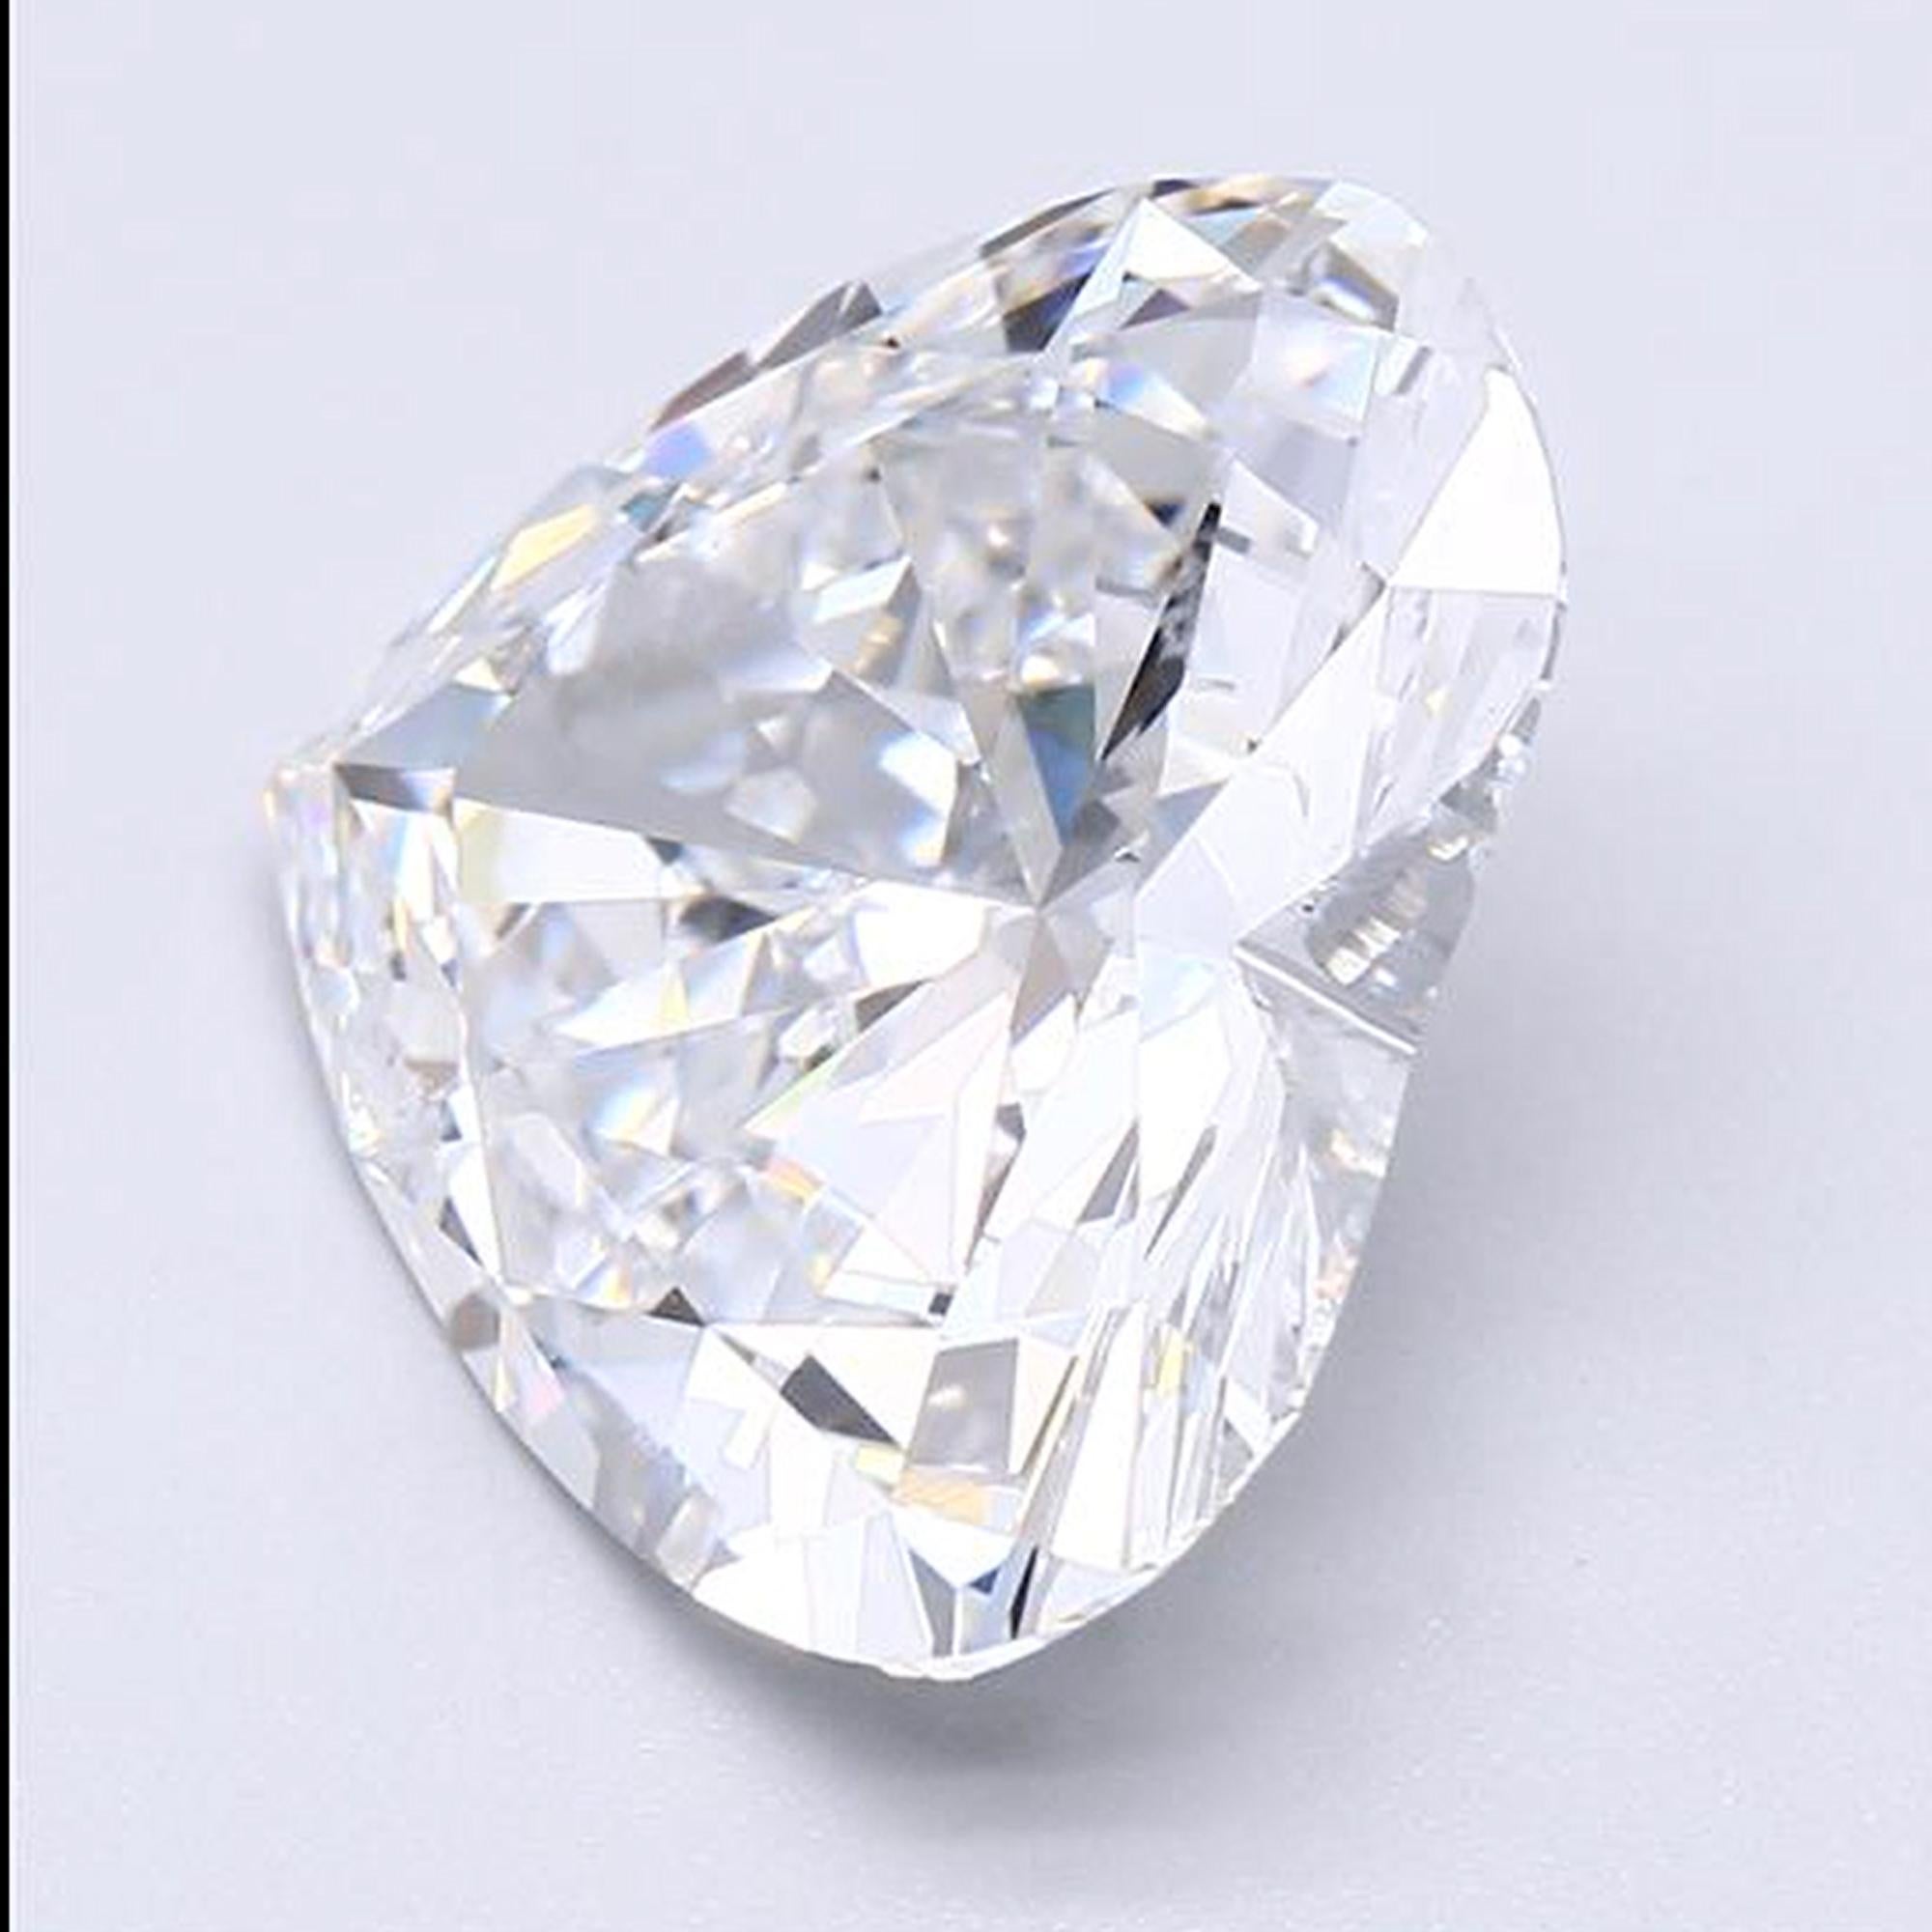 Modern 5.88 Carat Heart Shape Diamond GIA Certified For Sale